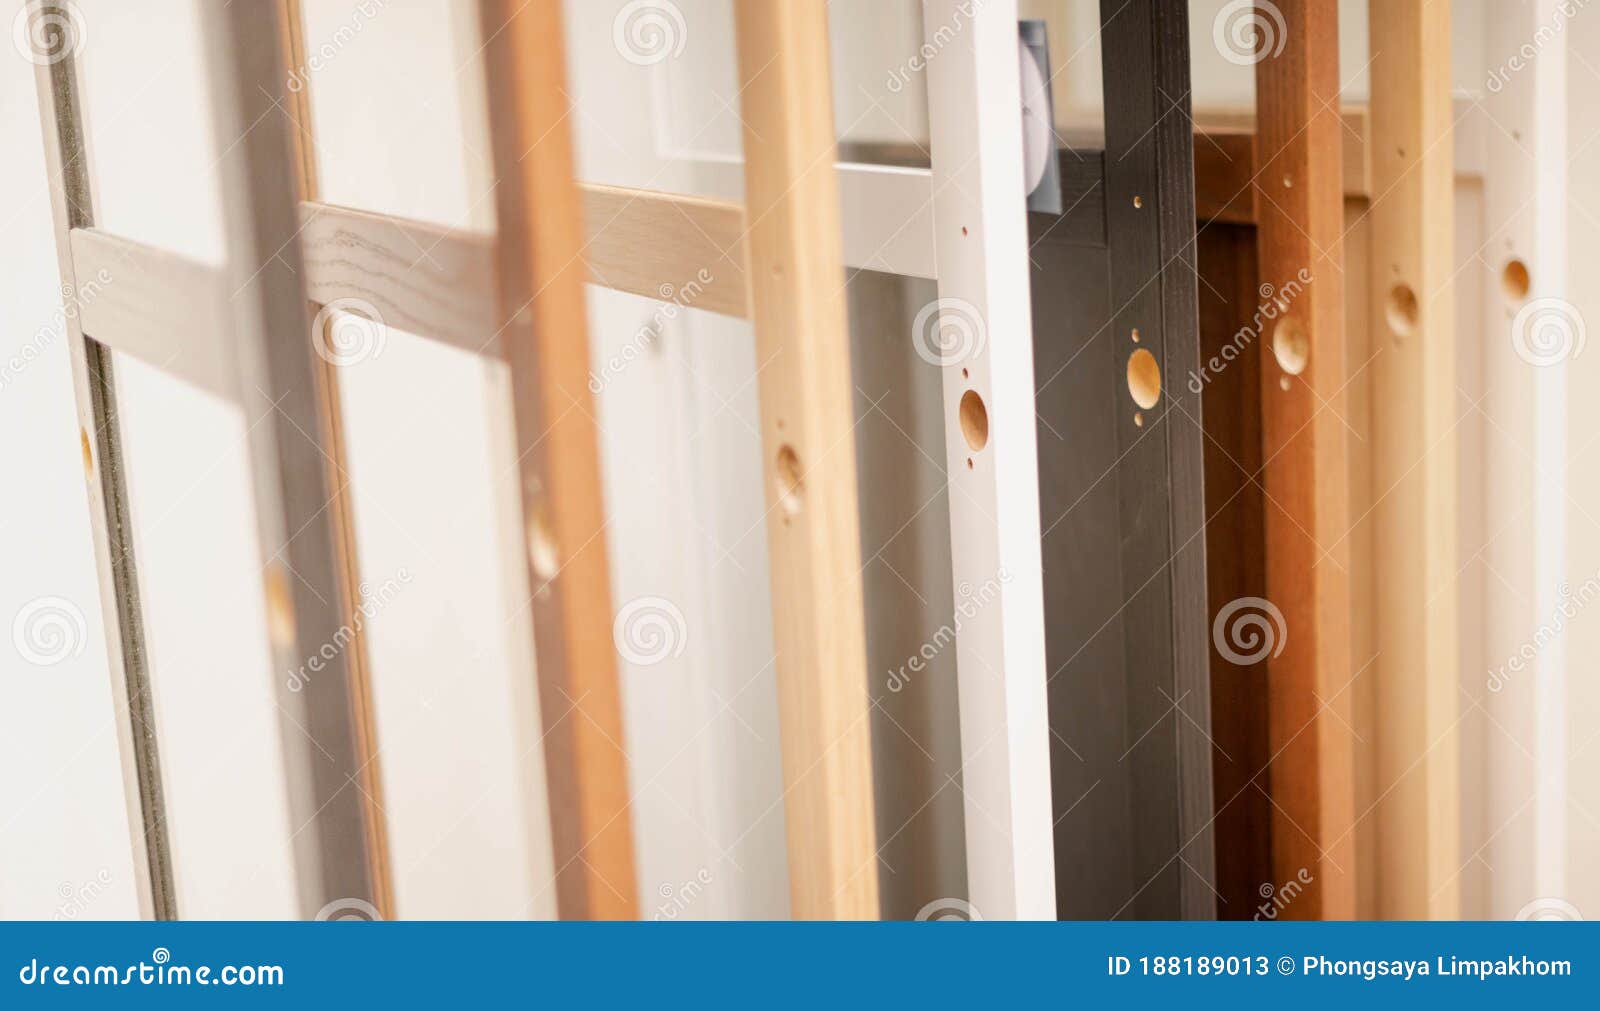 The Wood Plate Door for Buildin the Interior Doors Inside the ...